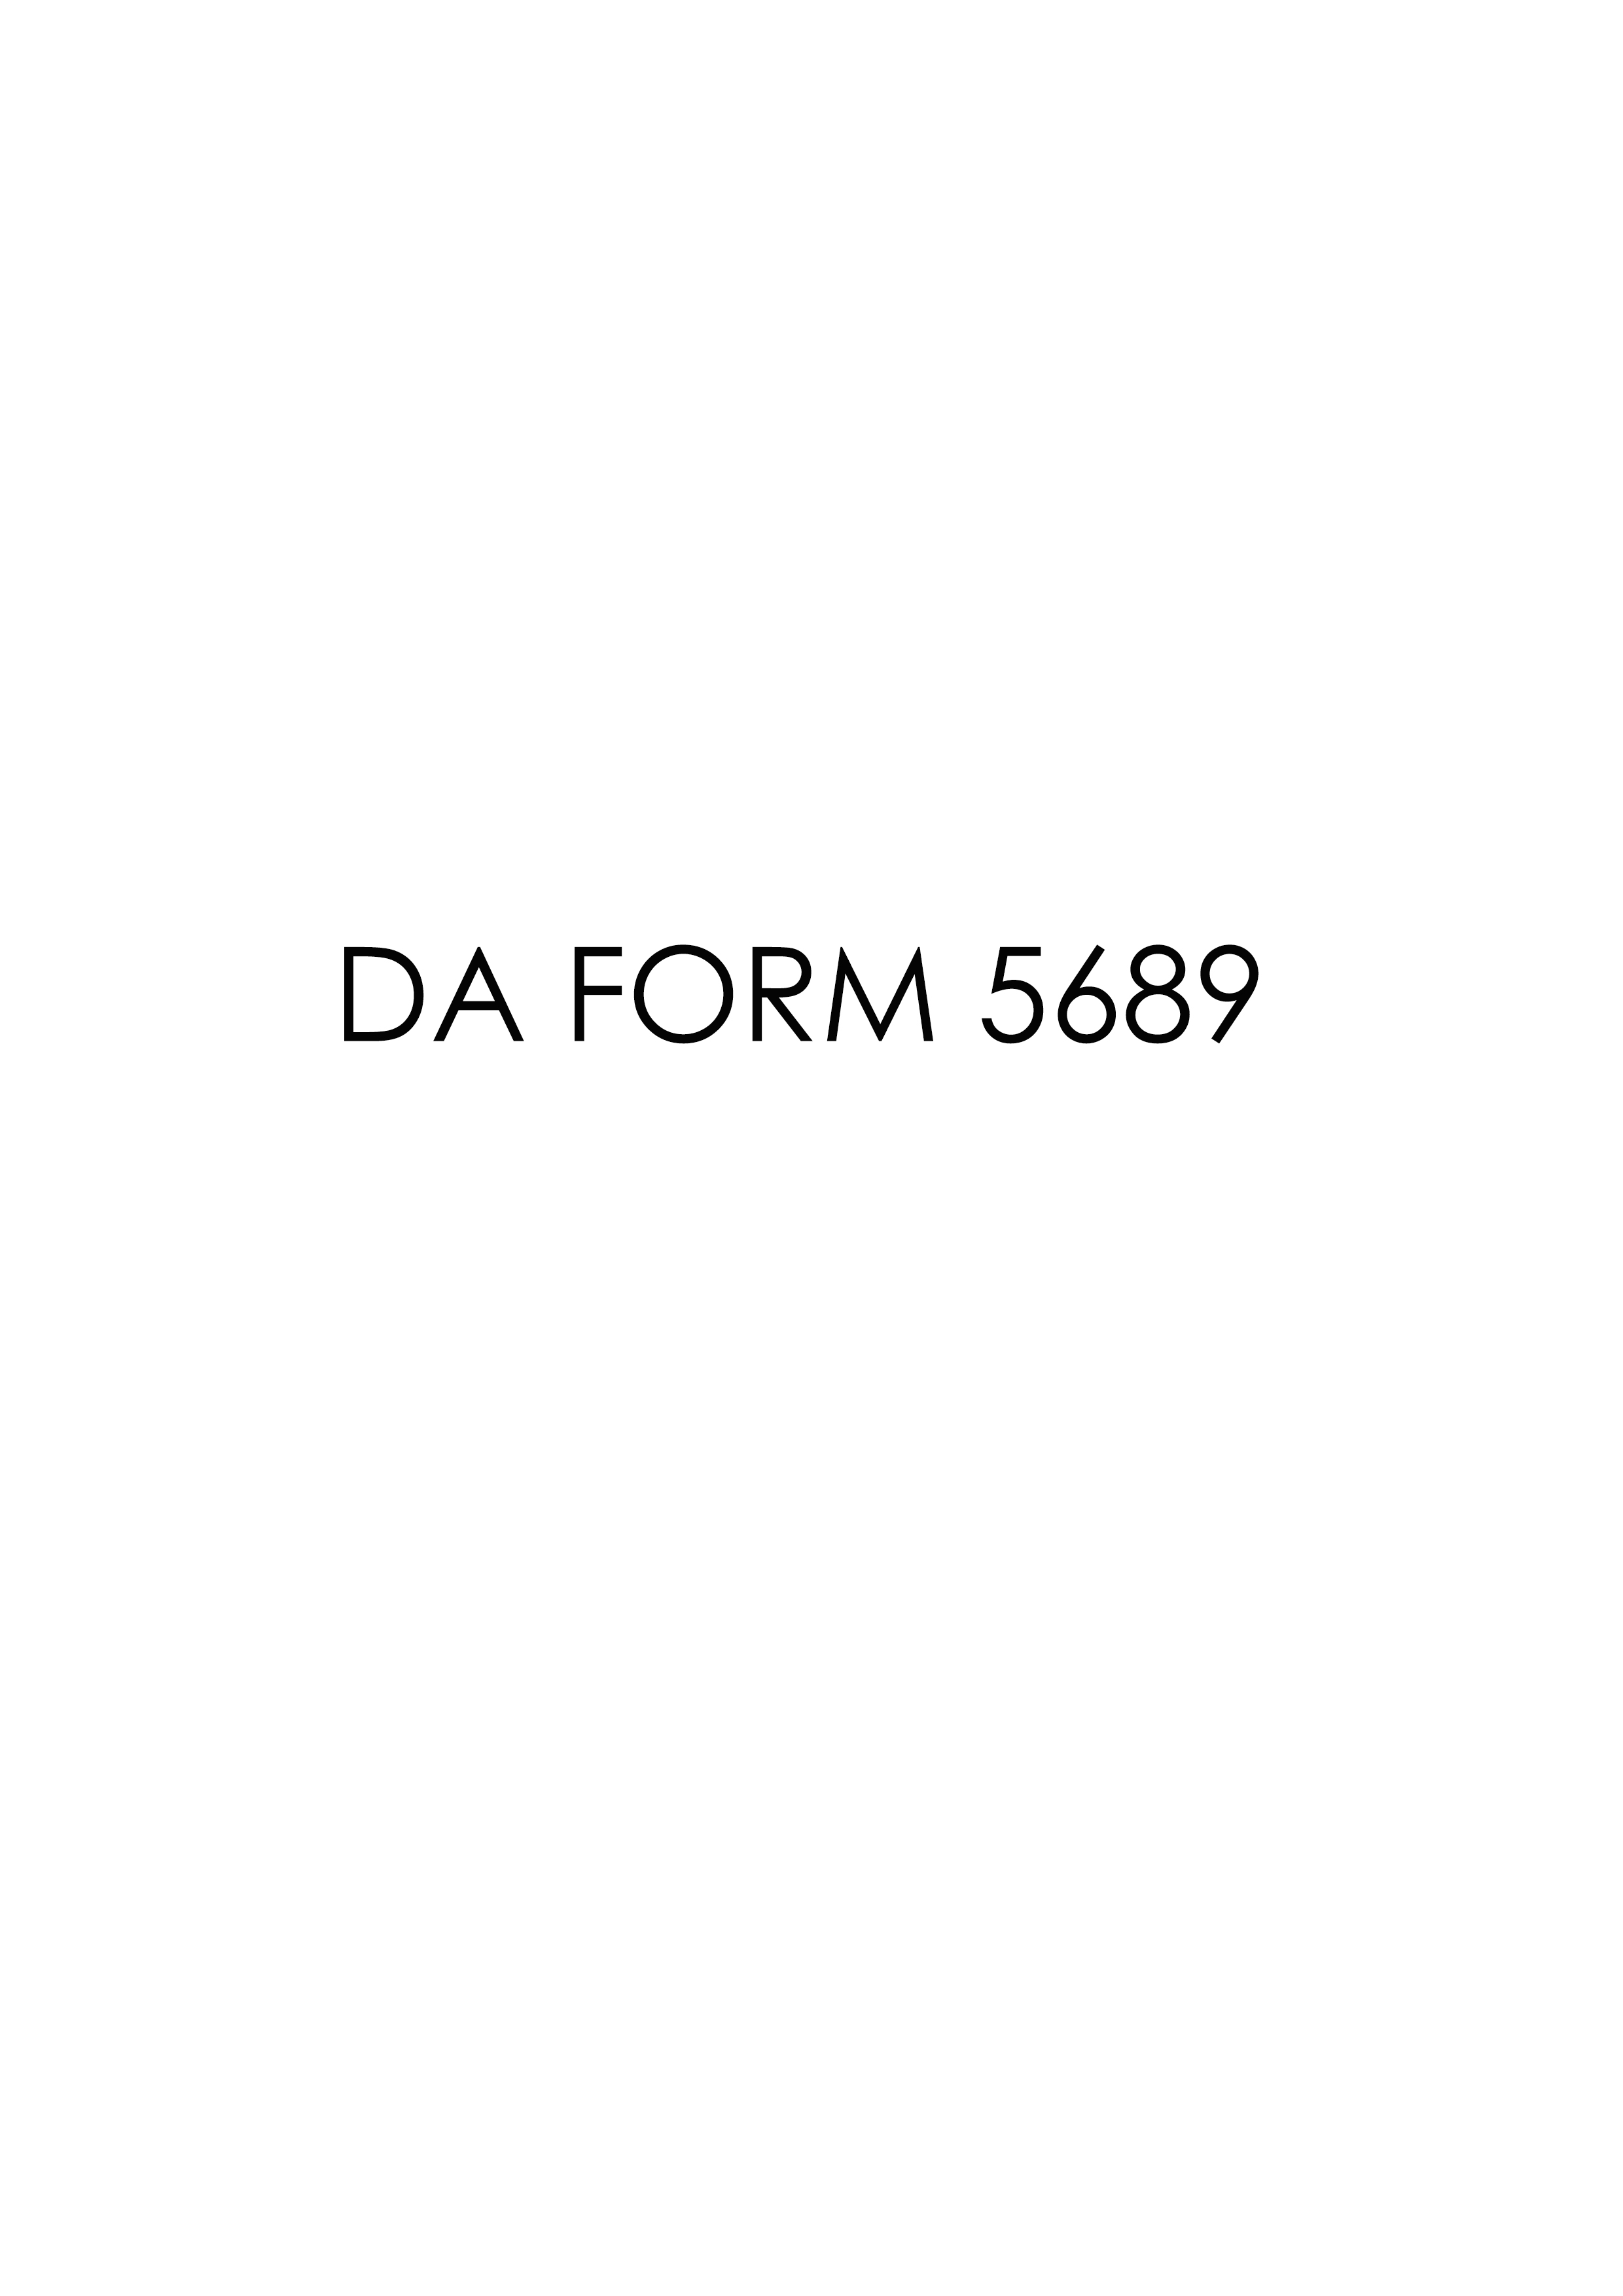 Download da 5689 Form